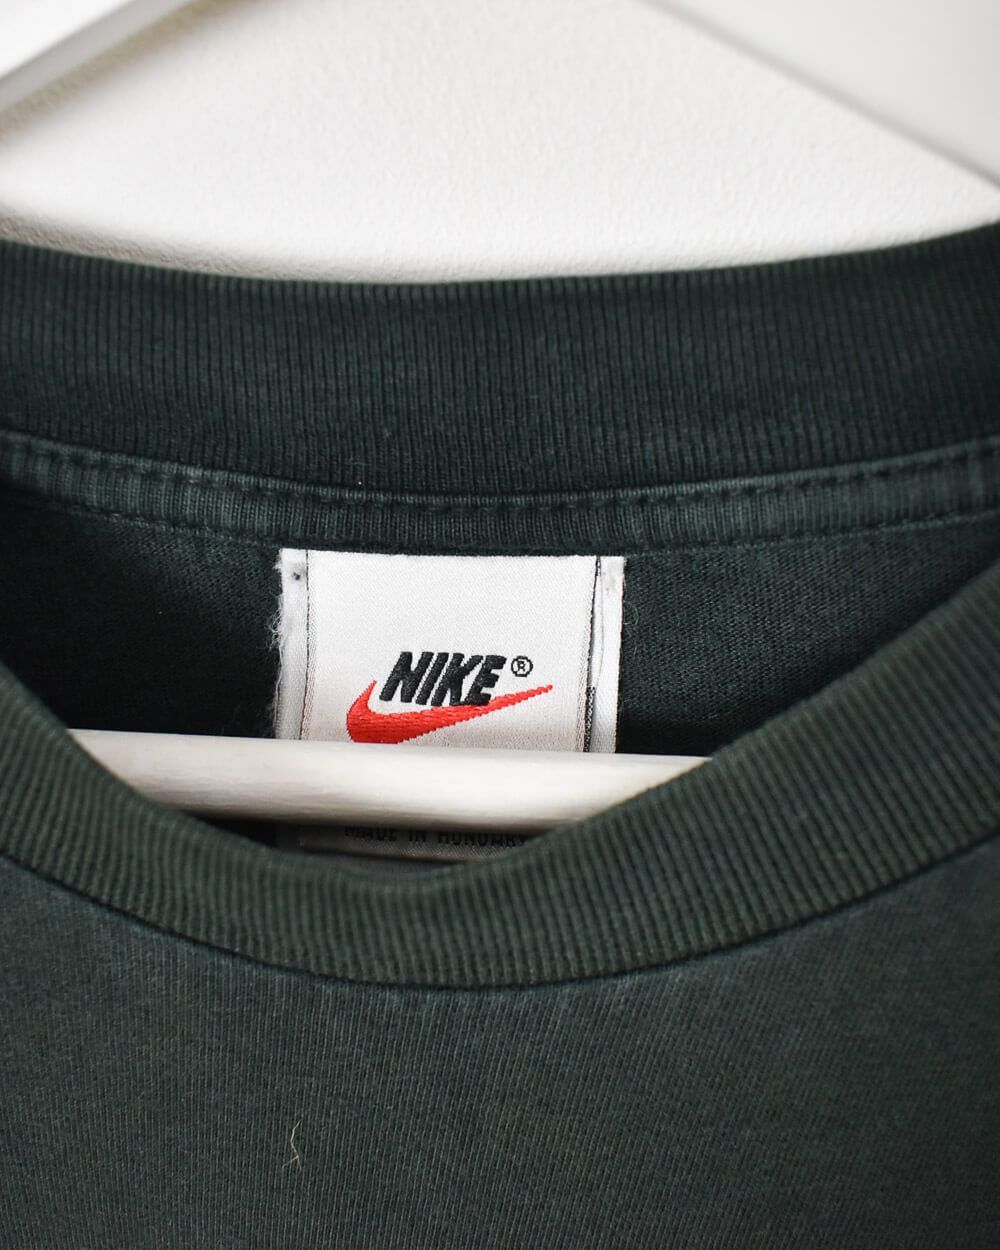 Black Nike Athletissima Lausanne 1998 T-Shirt - Small